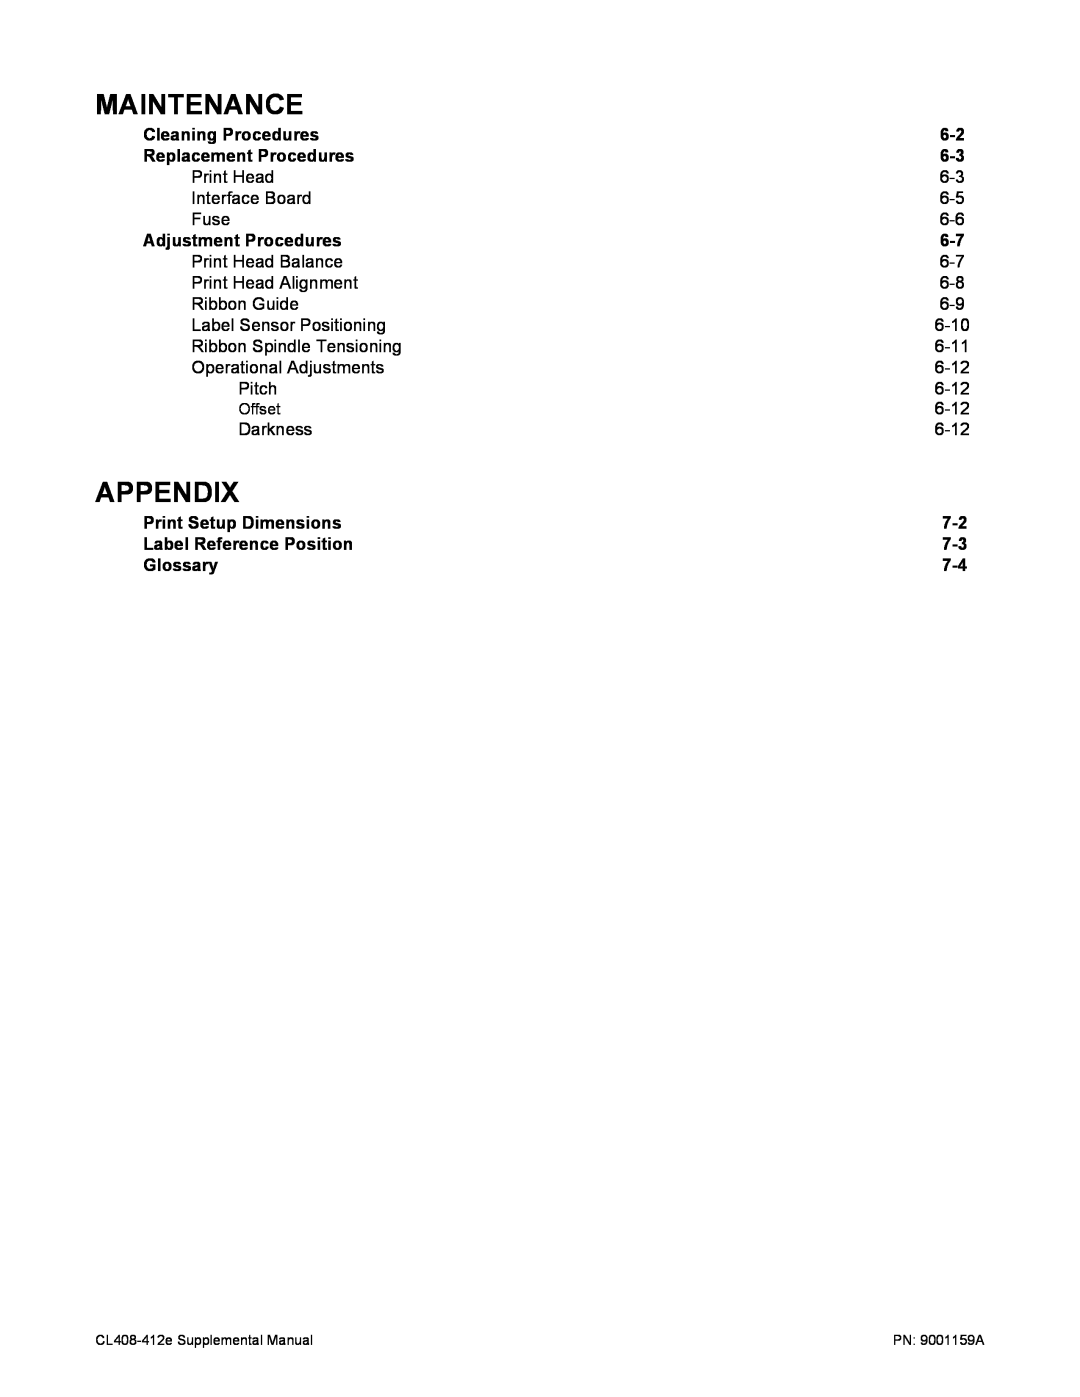 SATO CL408-412e manual Maintenance, Appendix 